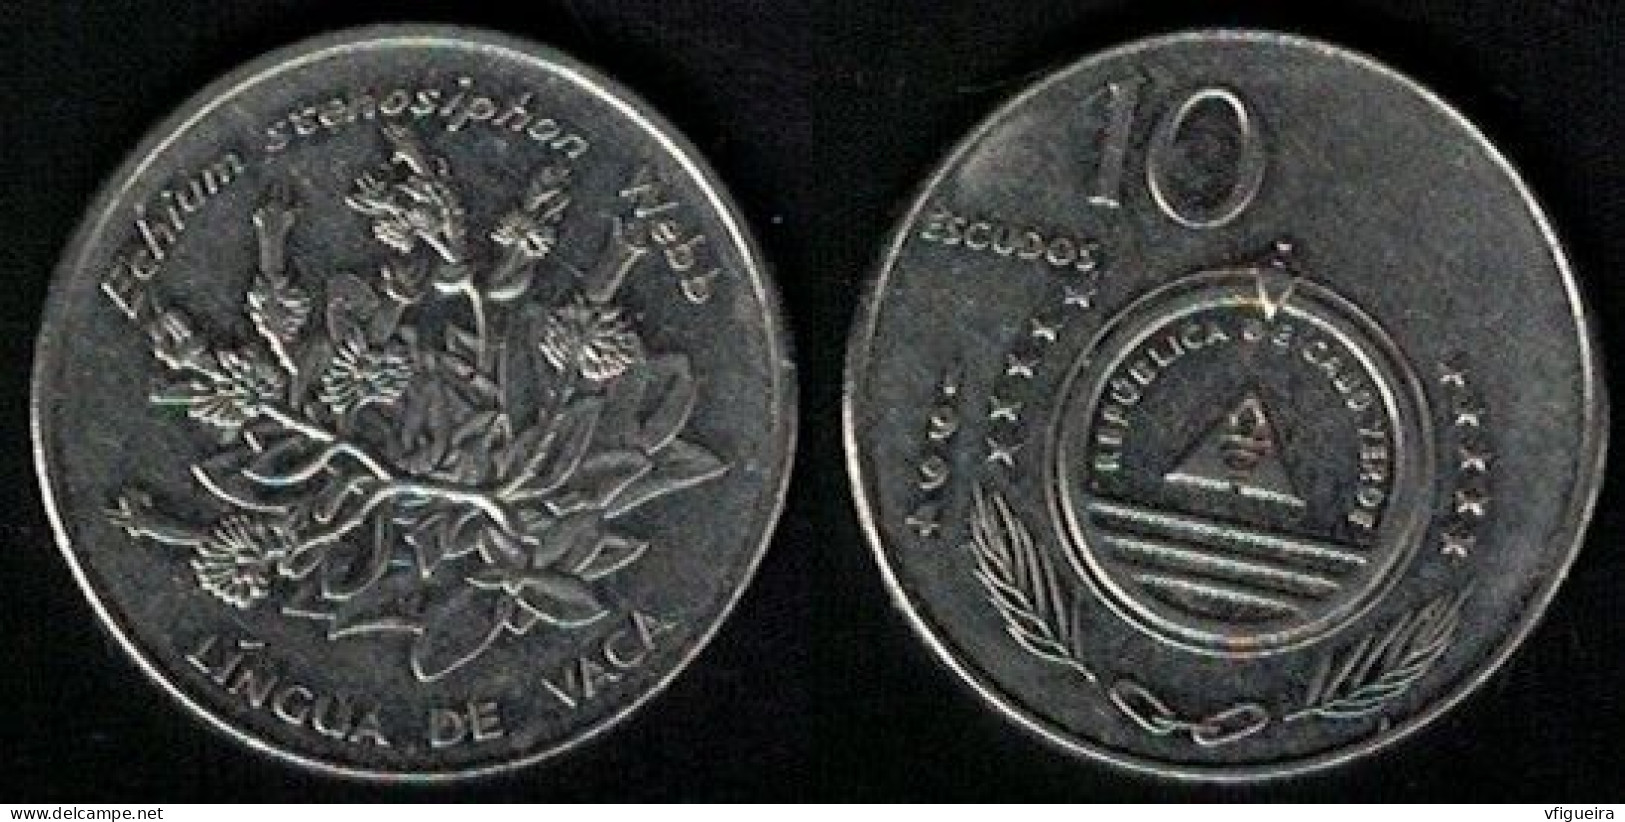 Cap Vert 1994 Pièce De Monnaie Coin 10 Escudos Plante Echium Stenosiphon Lingua De Vaca SU - Cape Verde